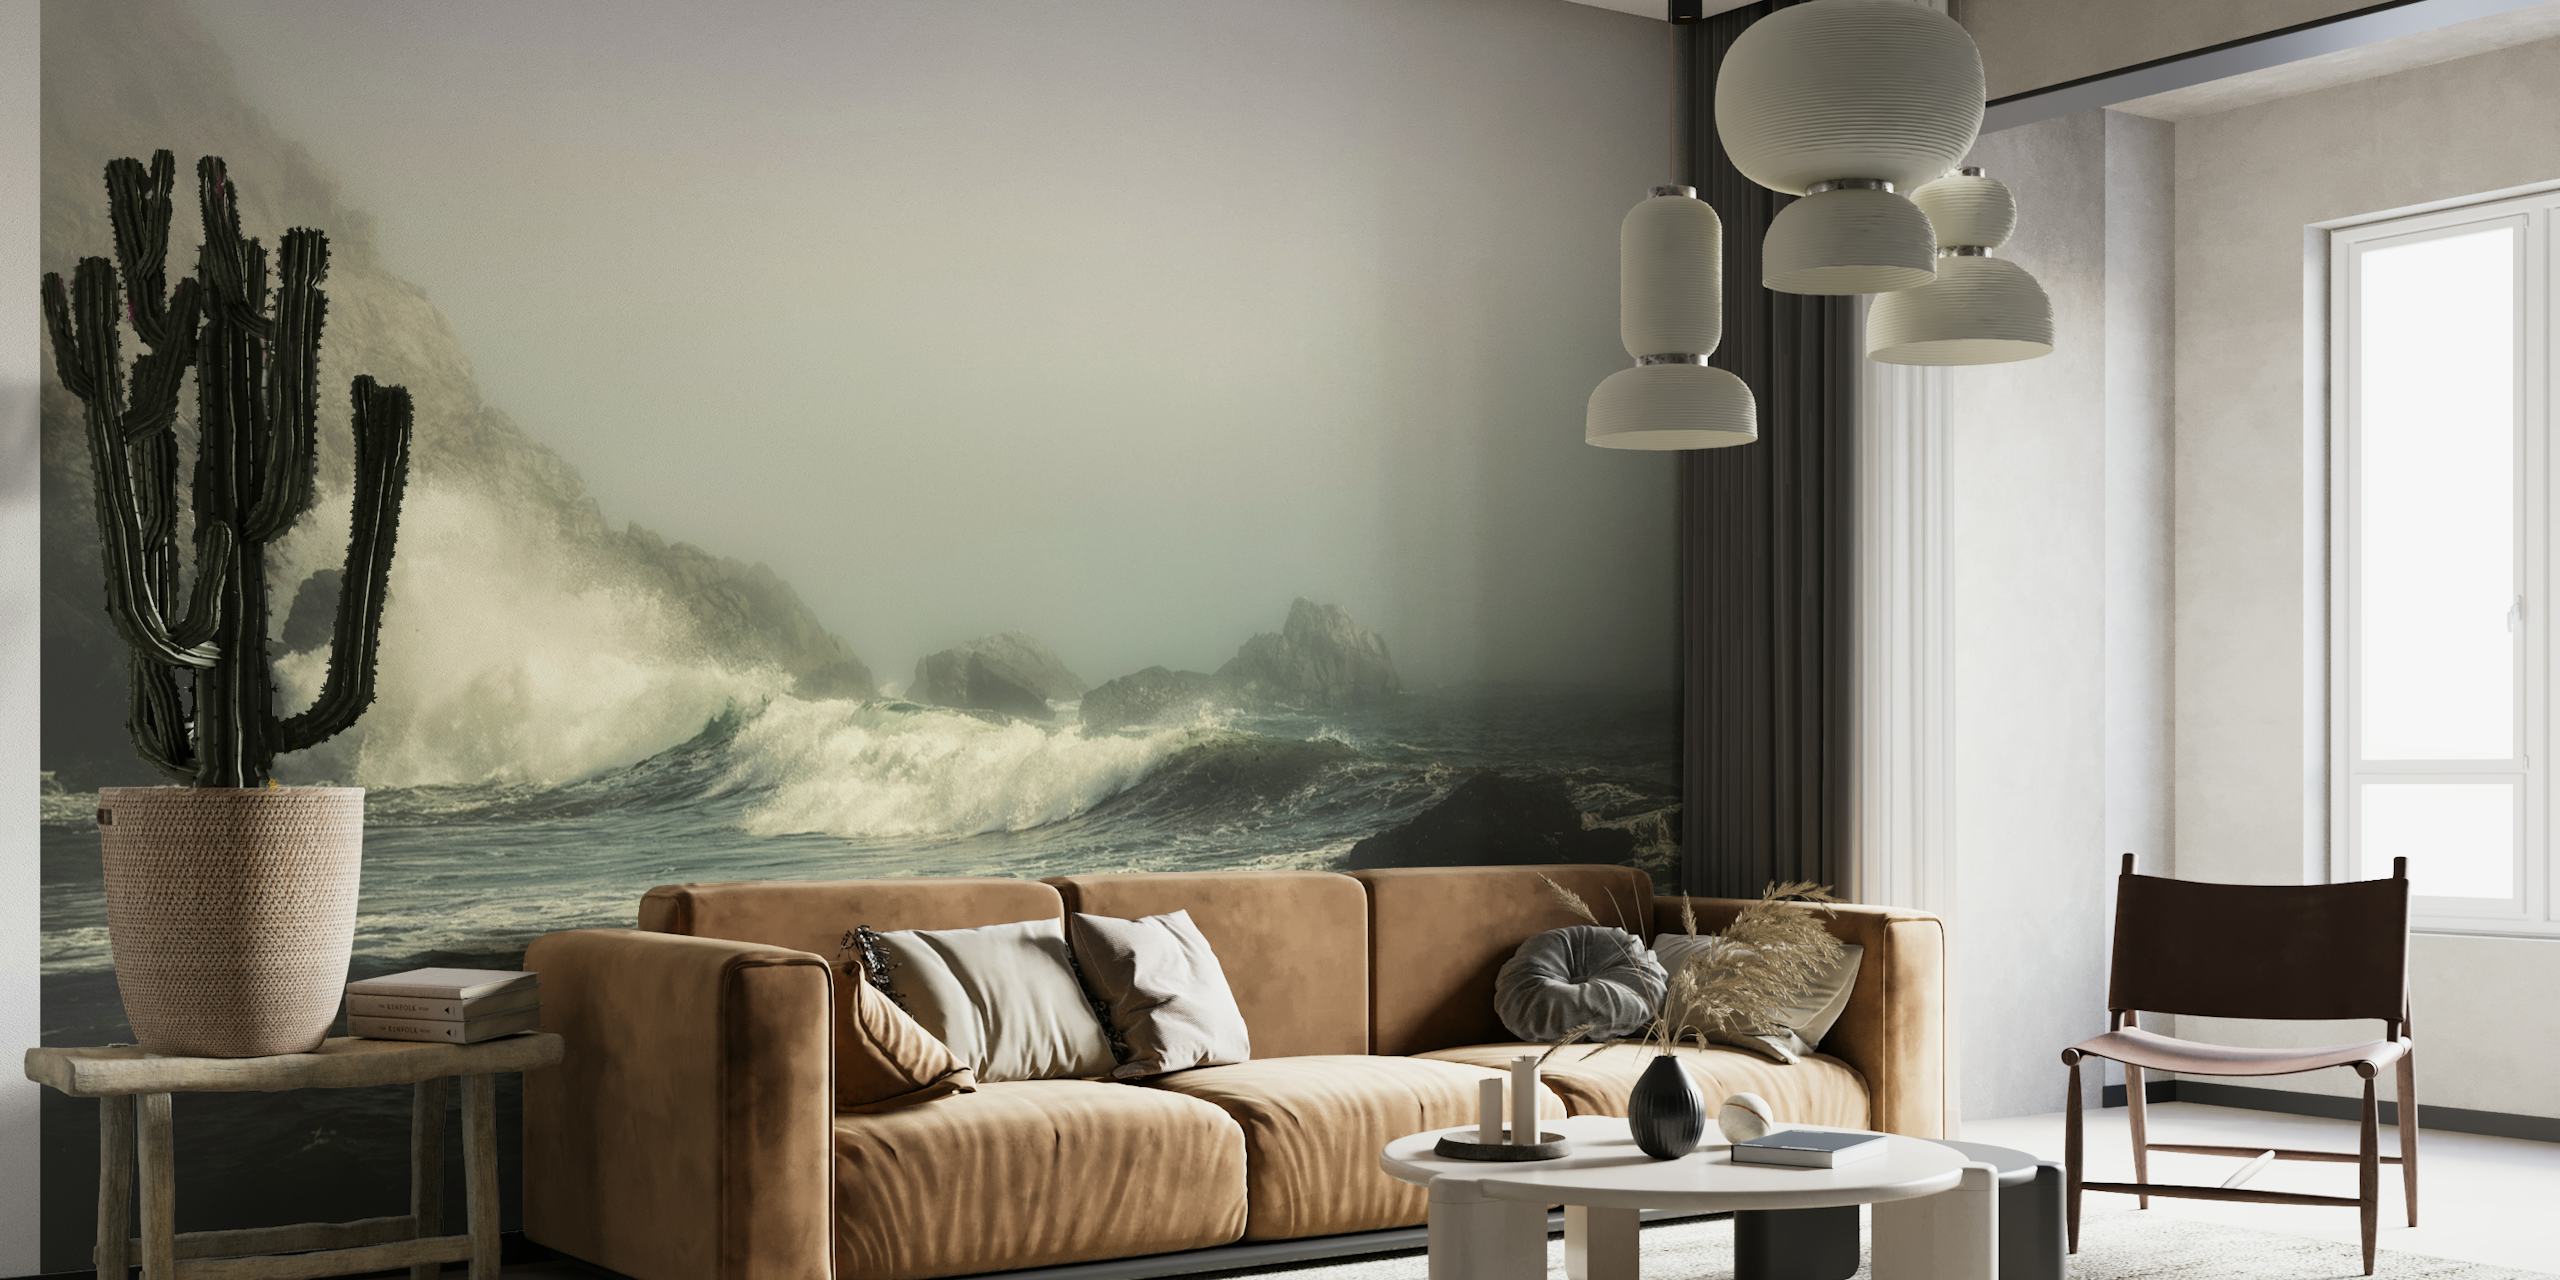 Seascape vægmaleri med tåge og bølgeskvulp mod klipper